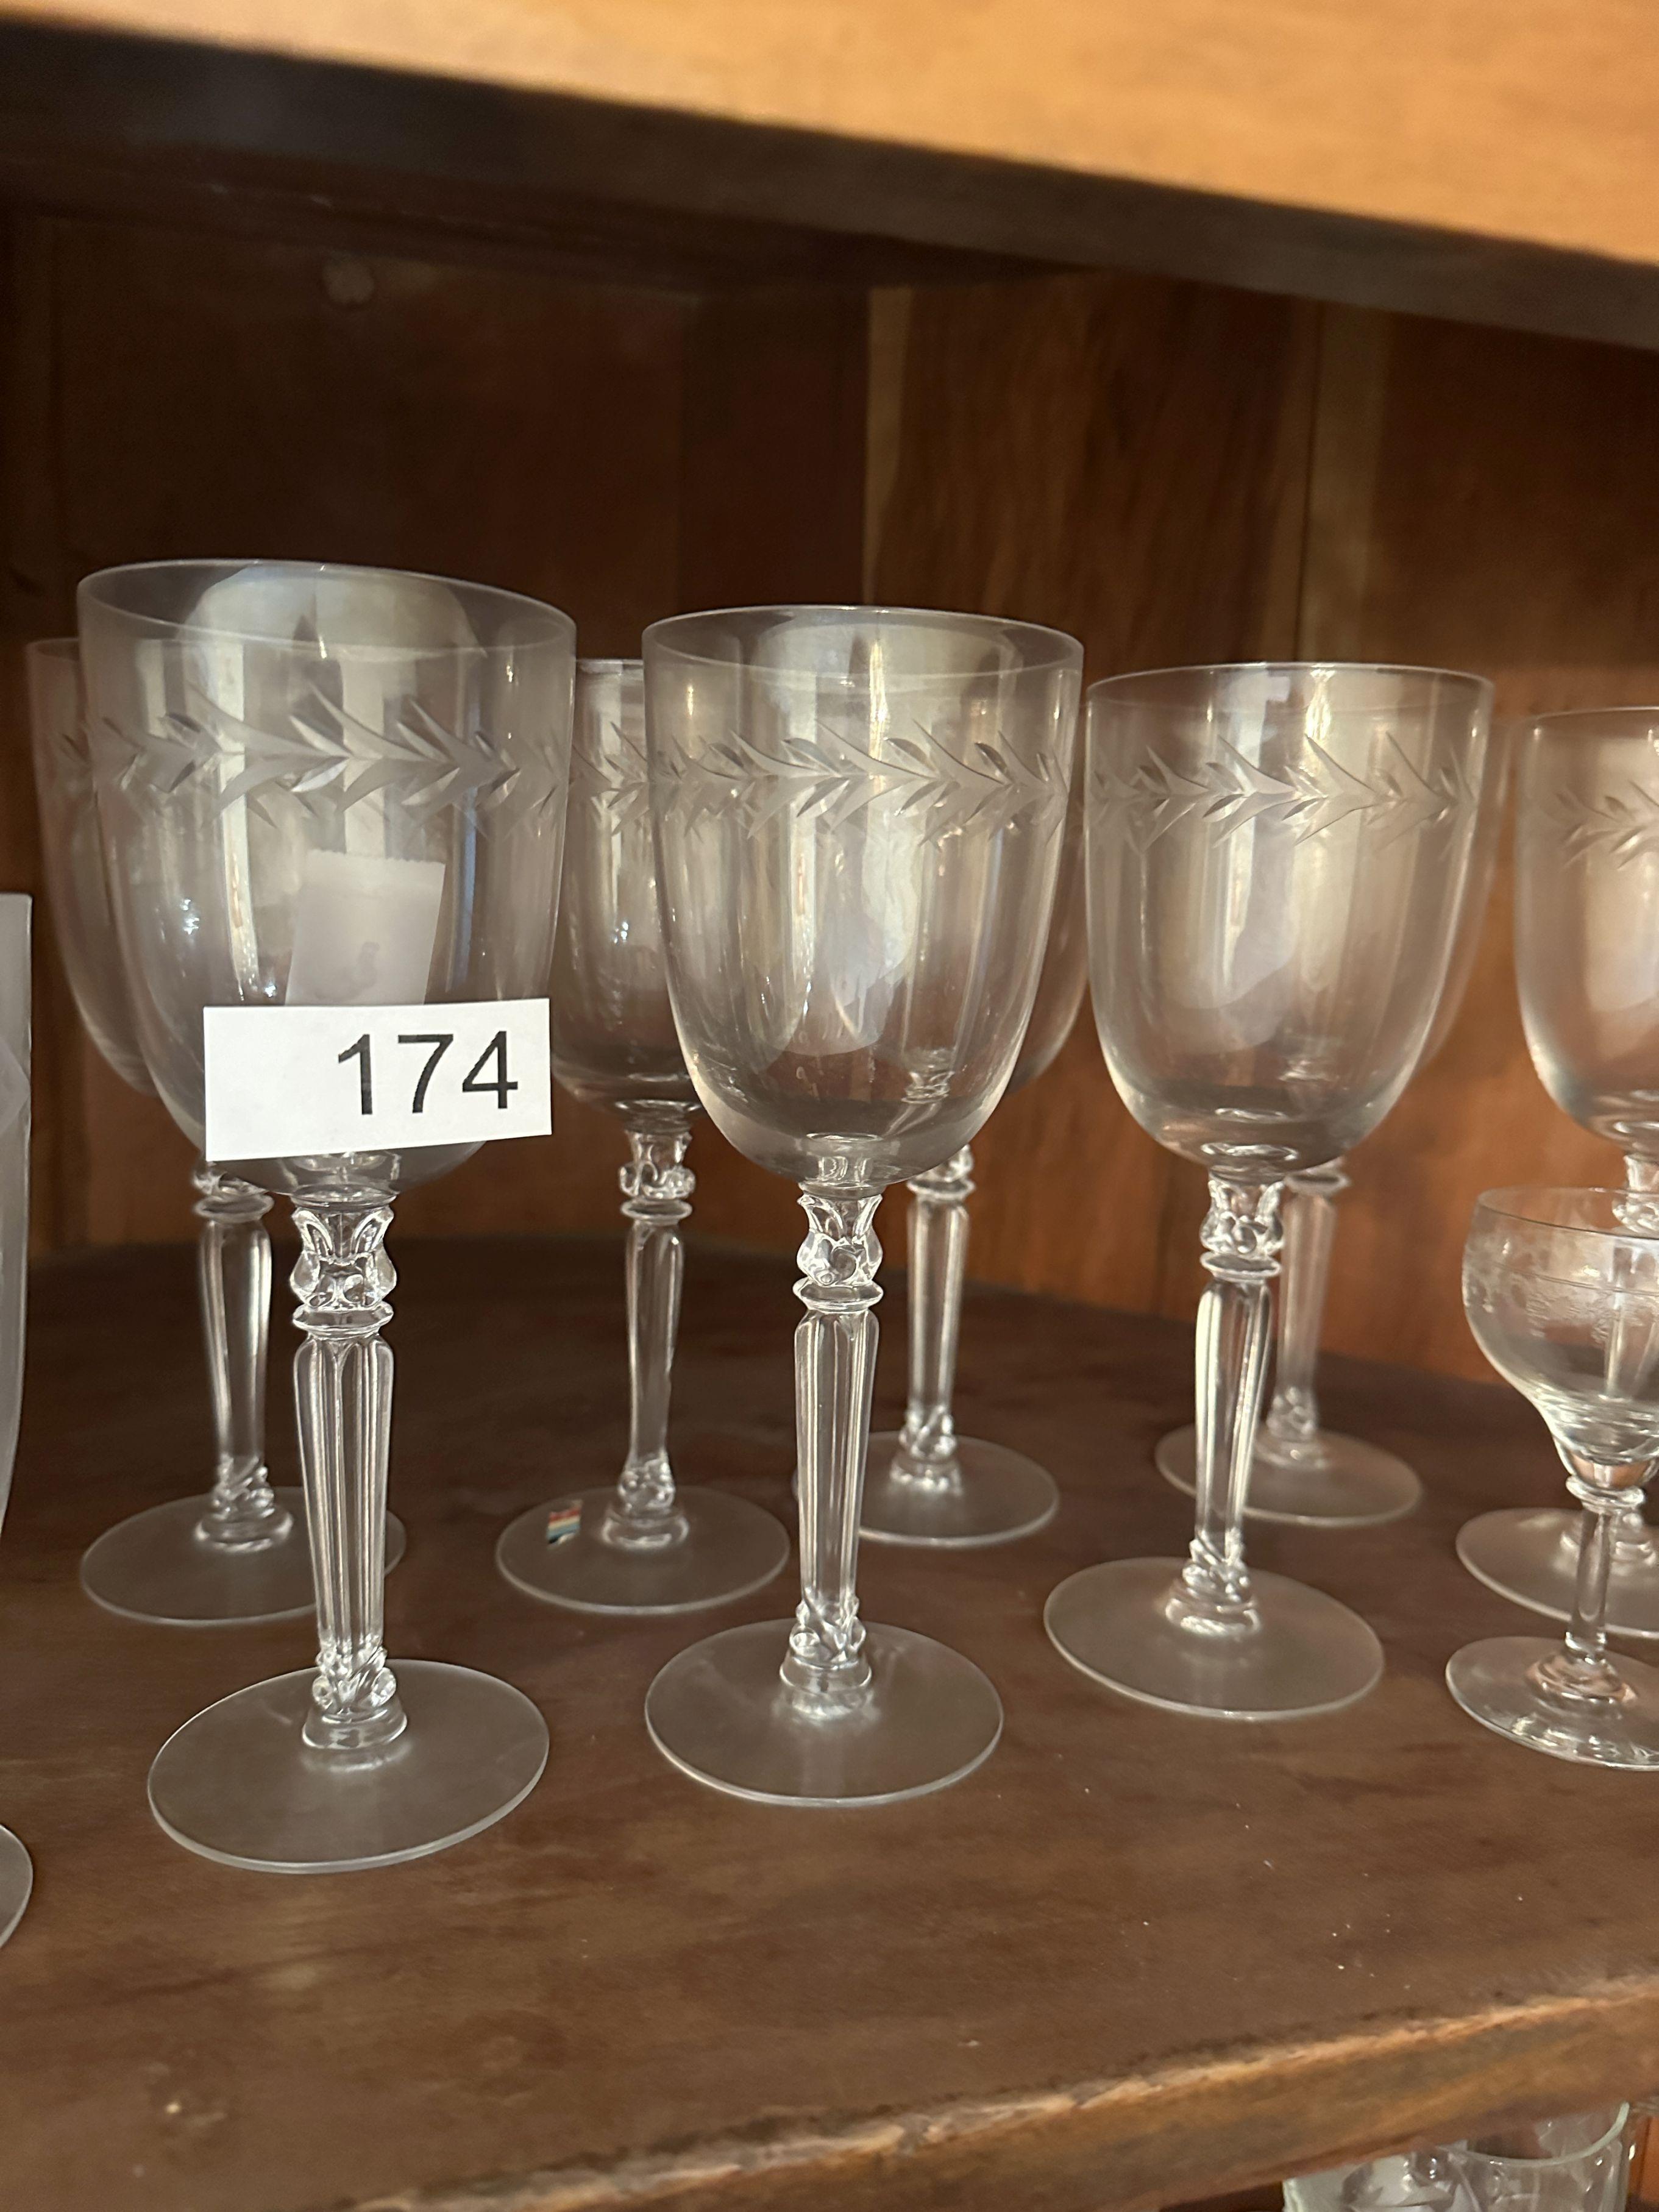 Top Shelf Lot/Box Lot/Stemware Glasses (Crystal???)